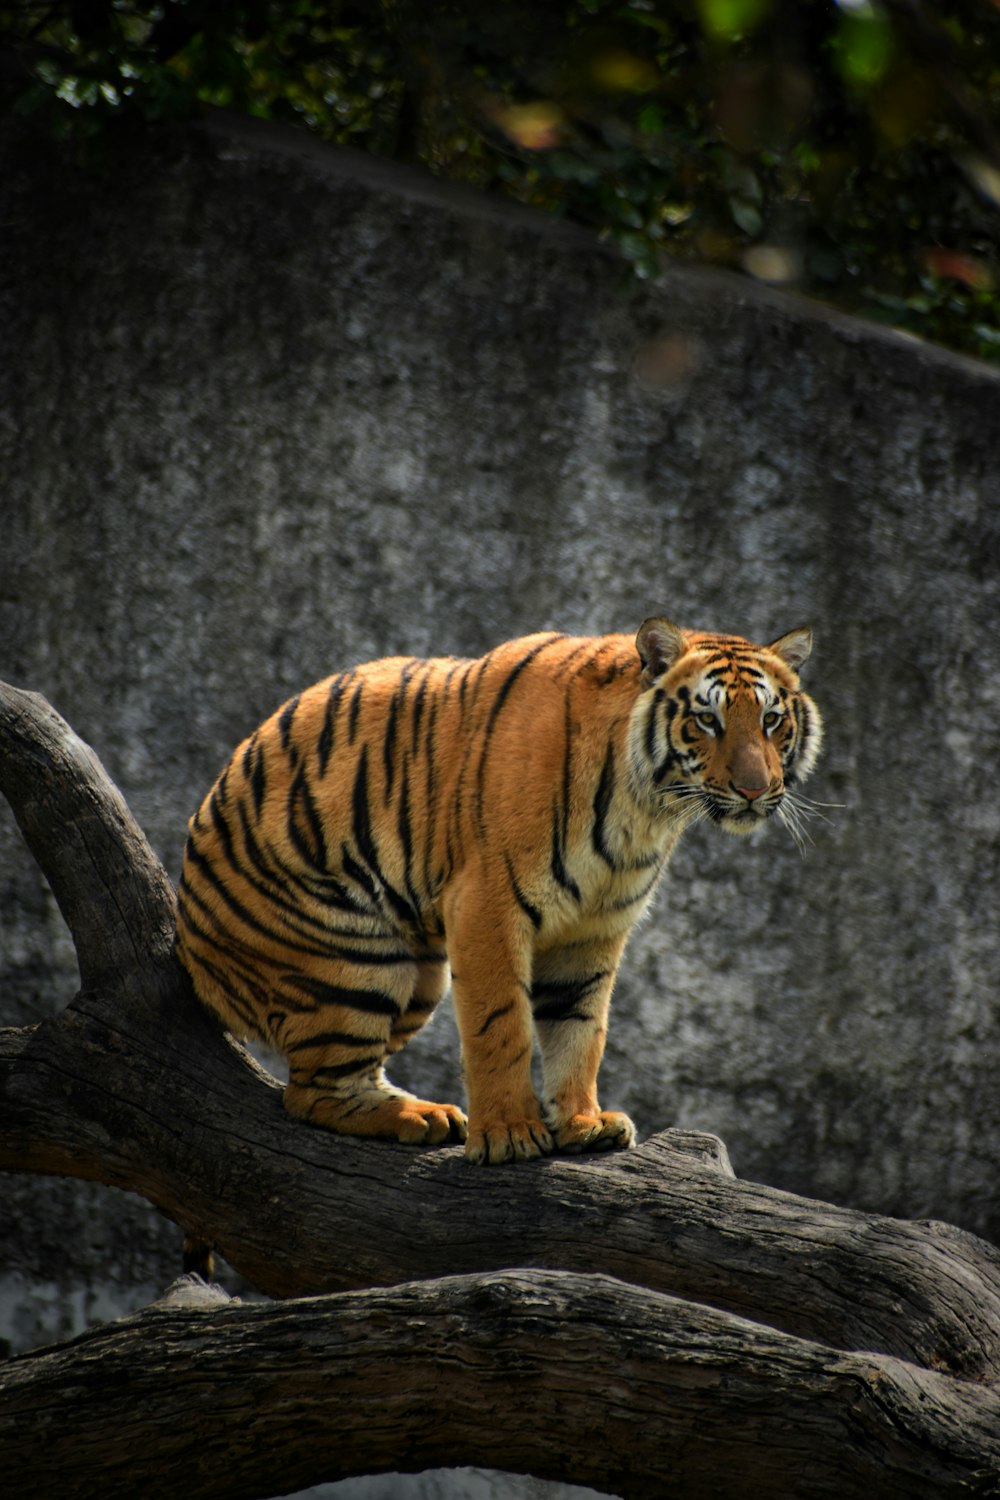 Royal Bengal Tiger Pictures | Download Free Images on Unsplash